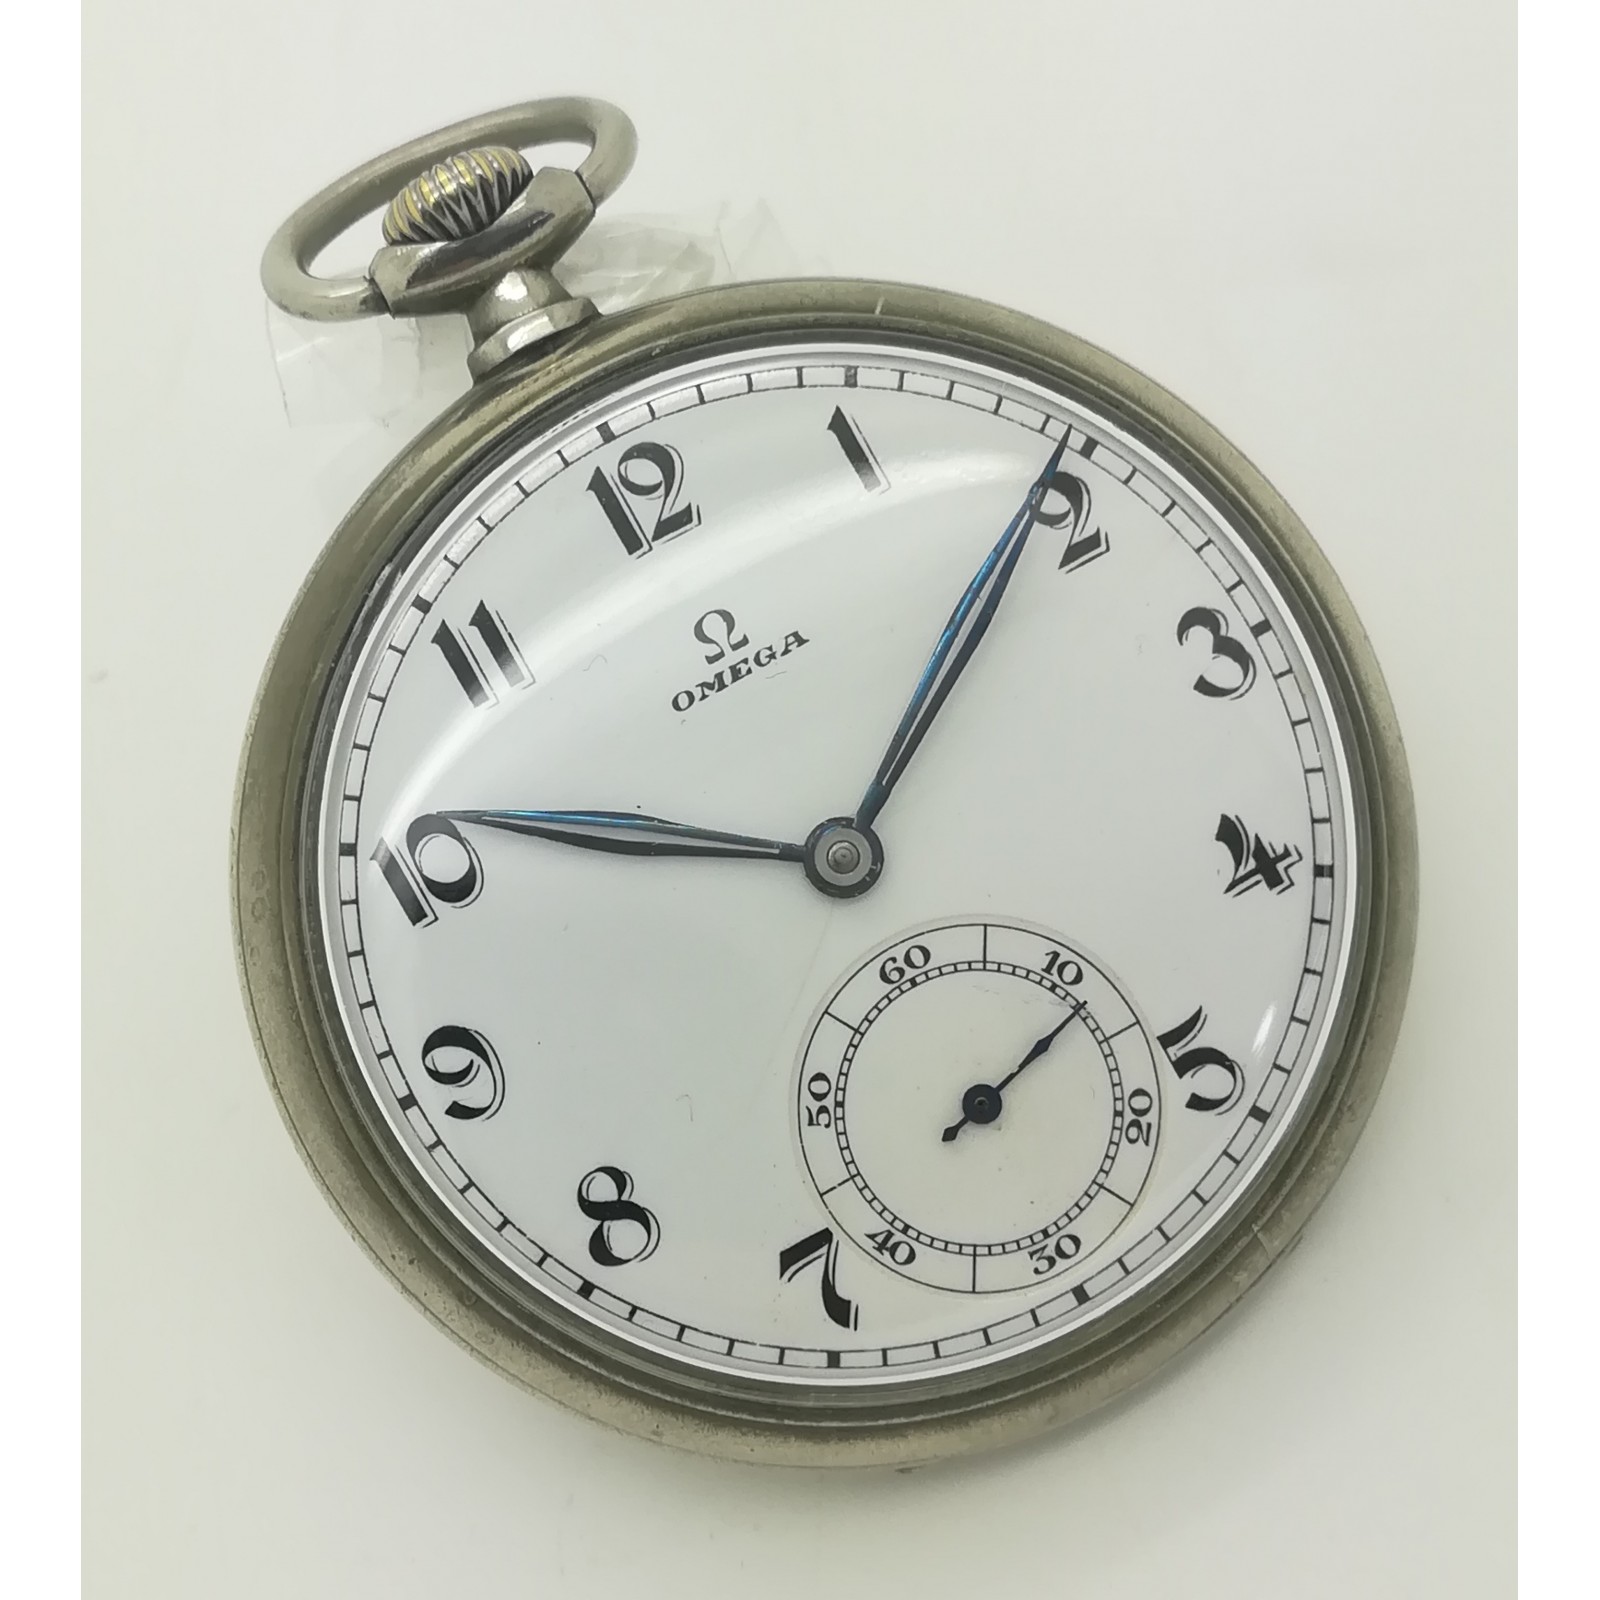 Cordero manual odio Reloj de Bolsillo OMEGA Art Deco Cal. 38.5 L-T1 de Cuerda, Acero, Swiss -  Año 1934 de segunda mano